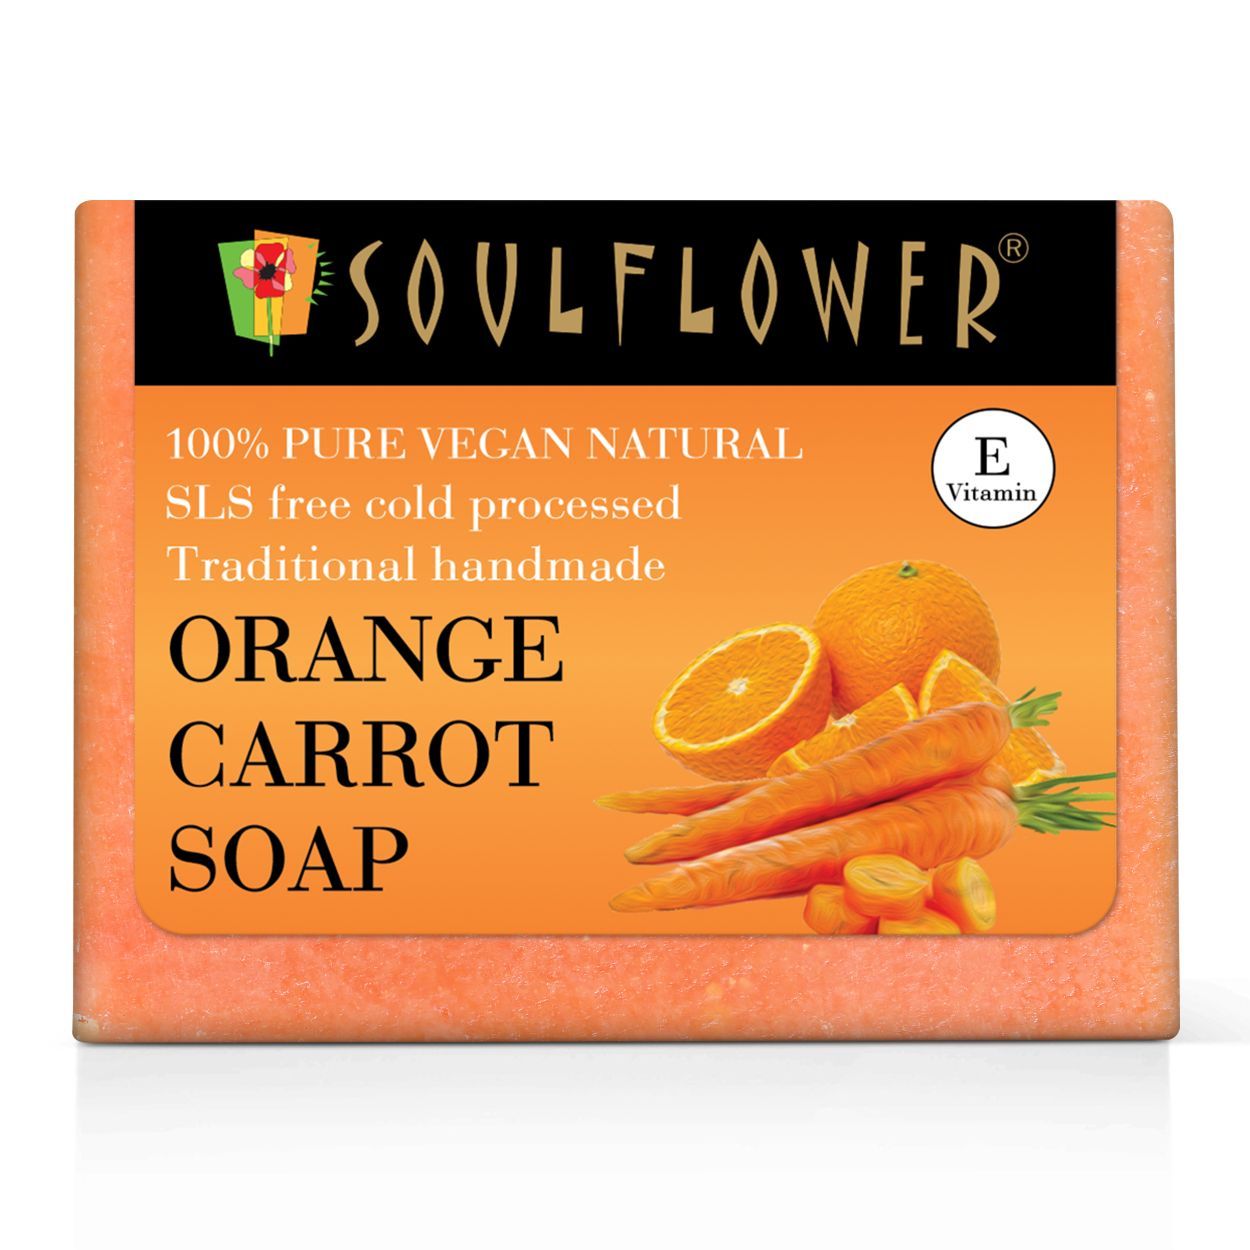 Soulflower Orange Carrot Soap